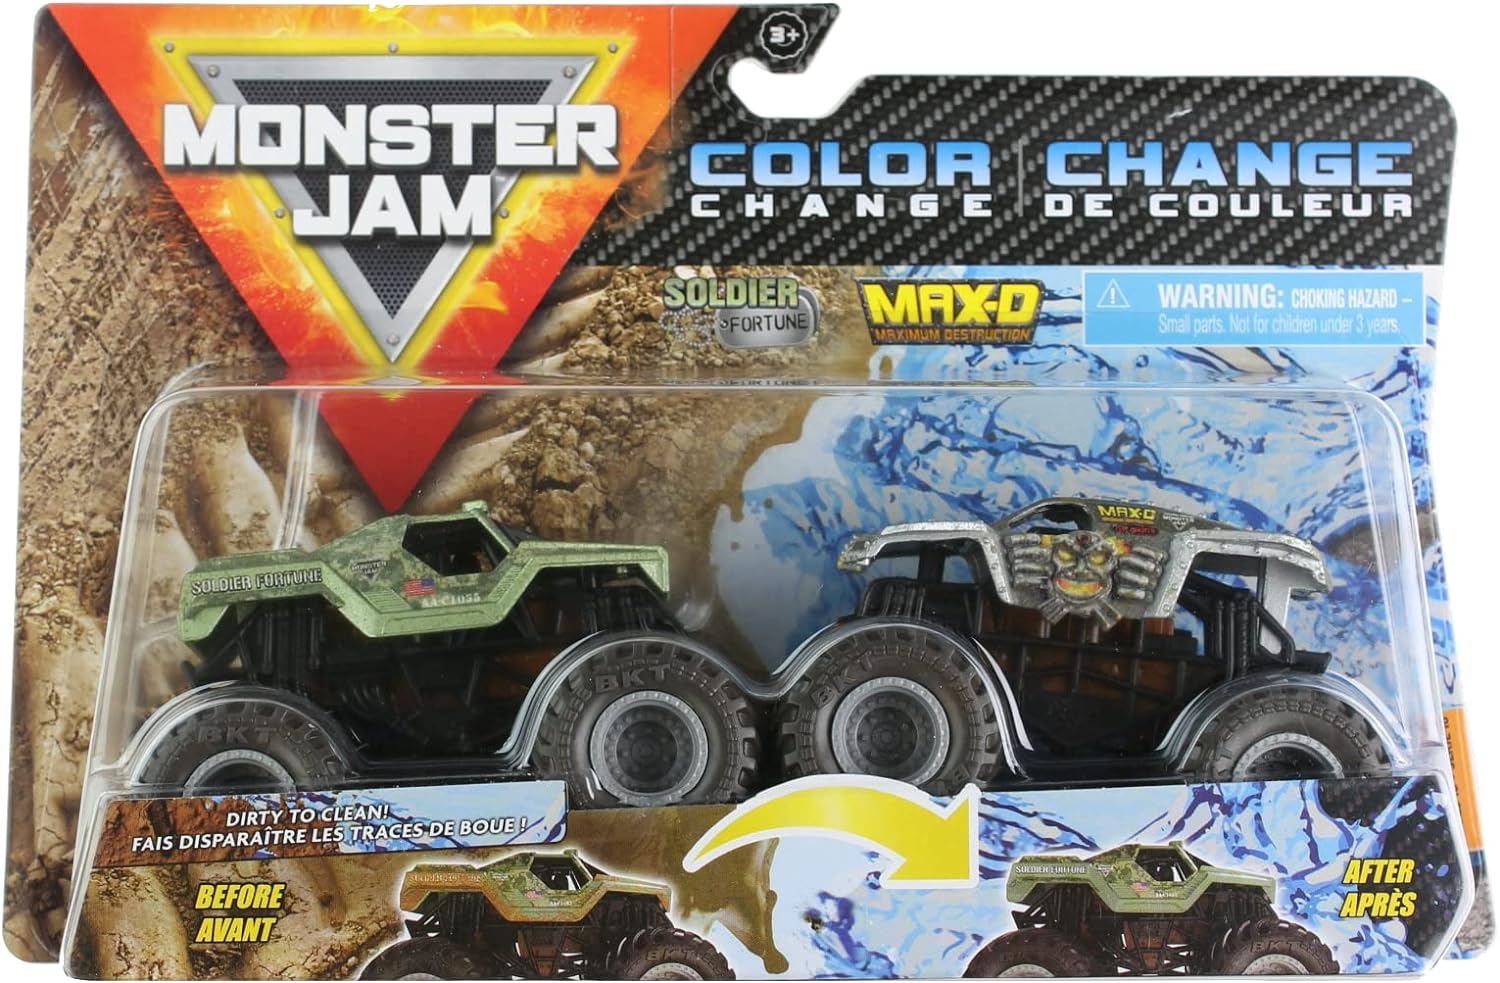 Monster Jam - Color Change - Soldier Fortune vs. Max-D - Leker